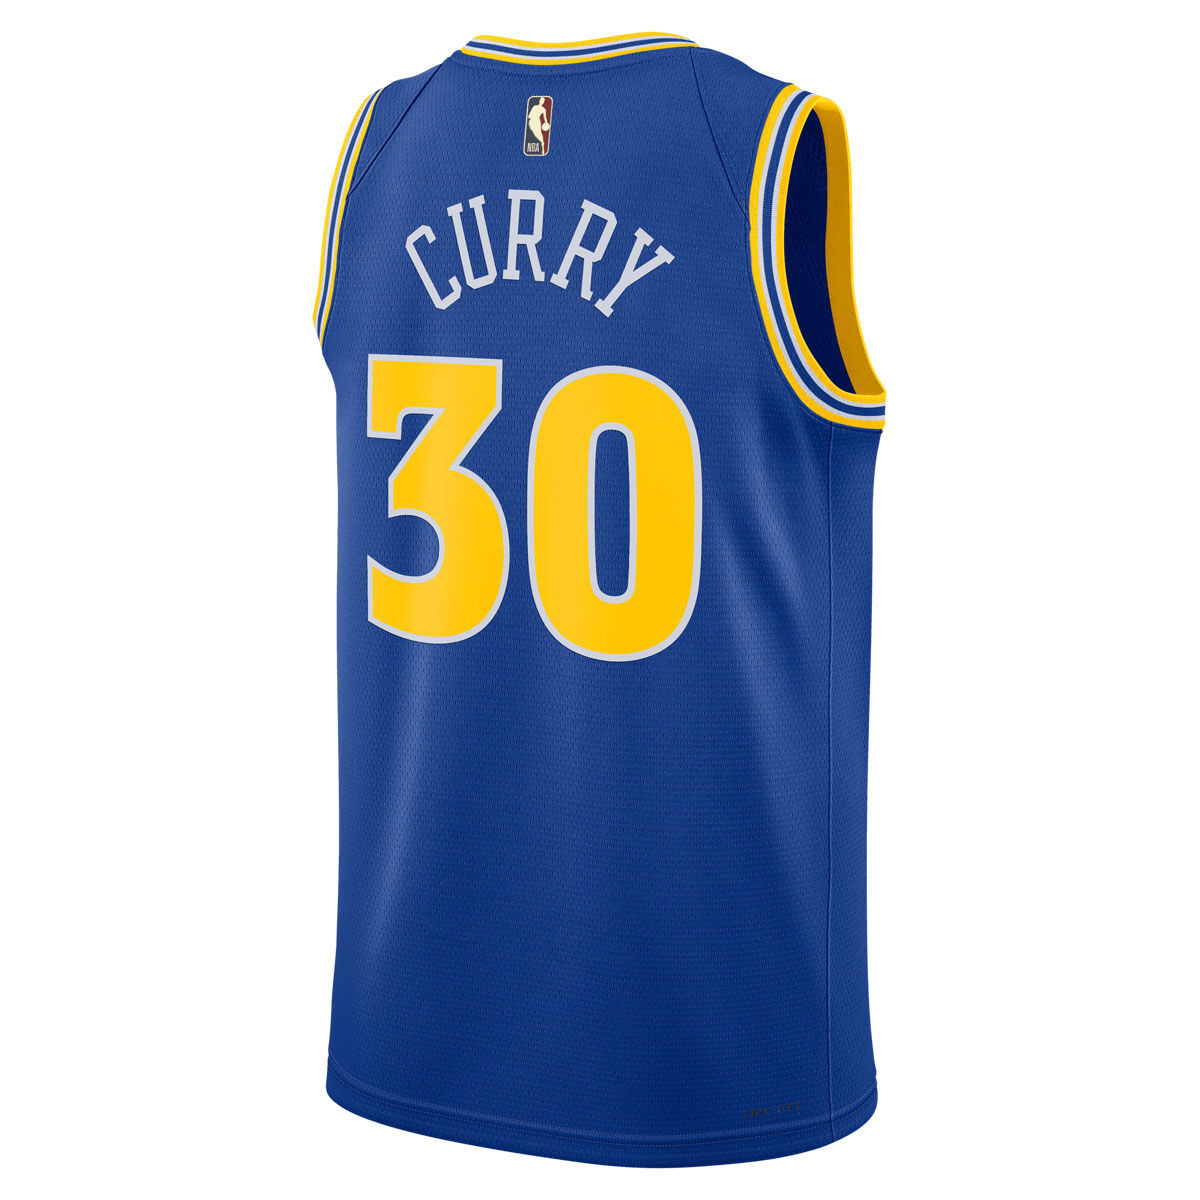 Outerstuff Big Boys Stephen Curry Golden State Warriors All Star